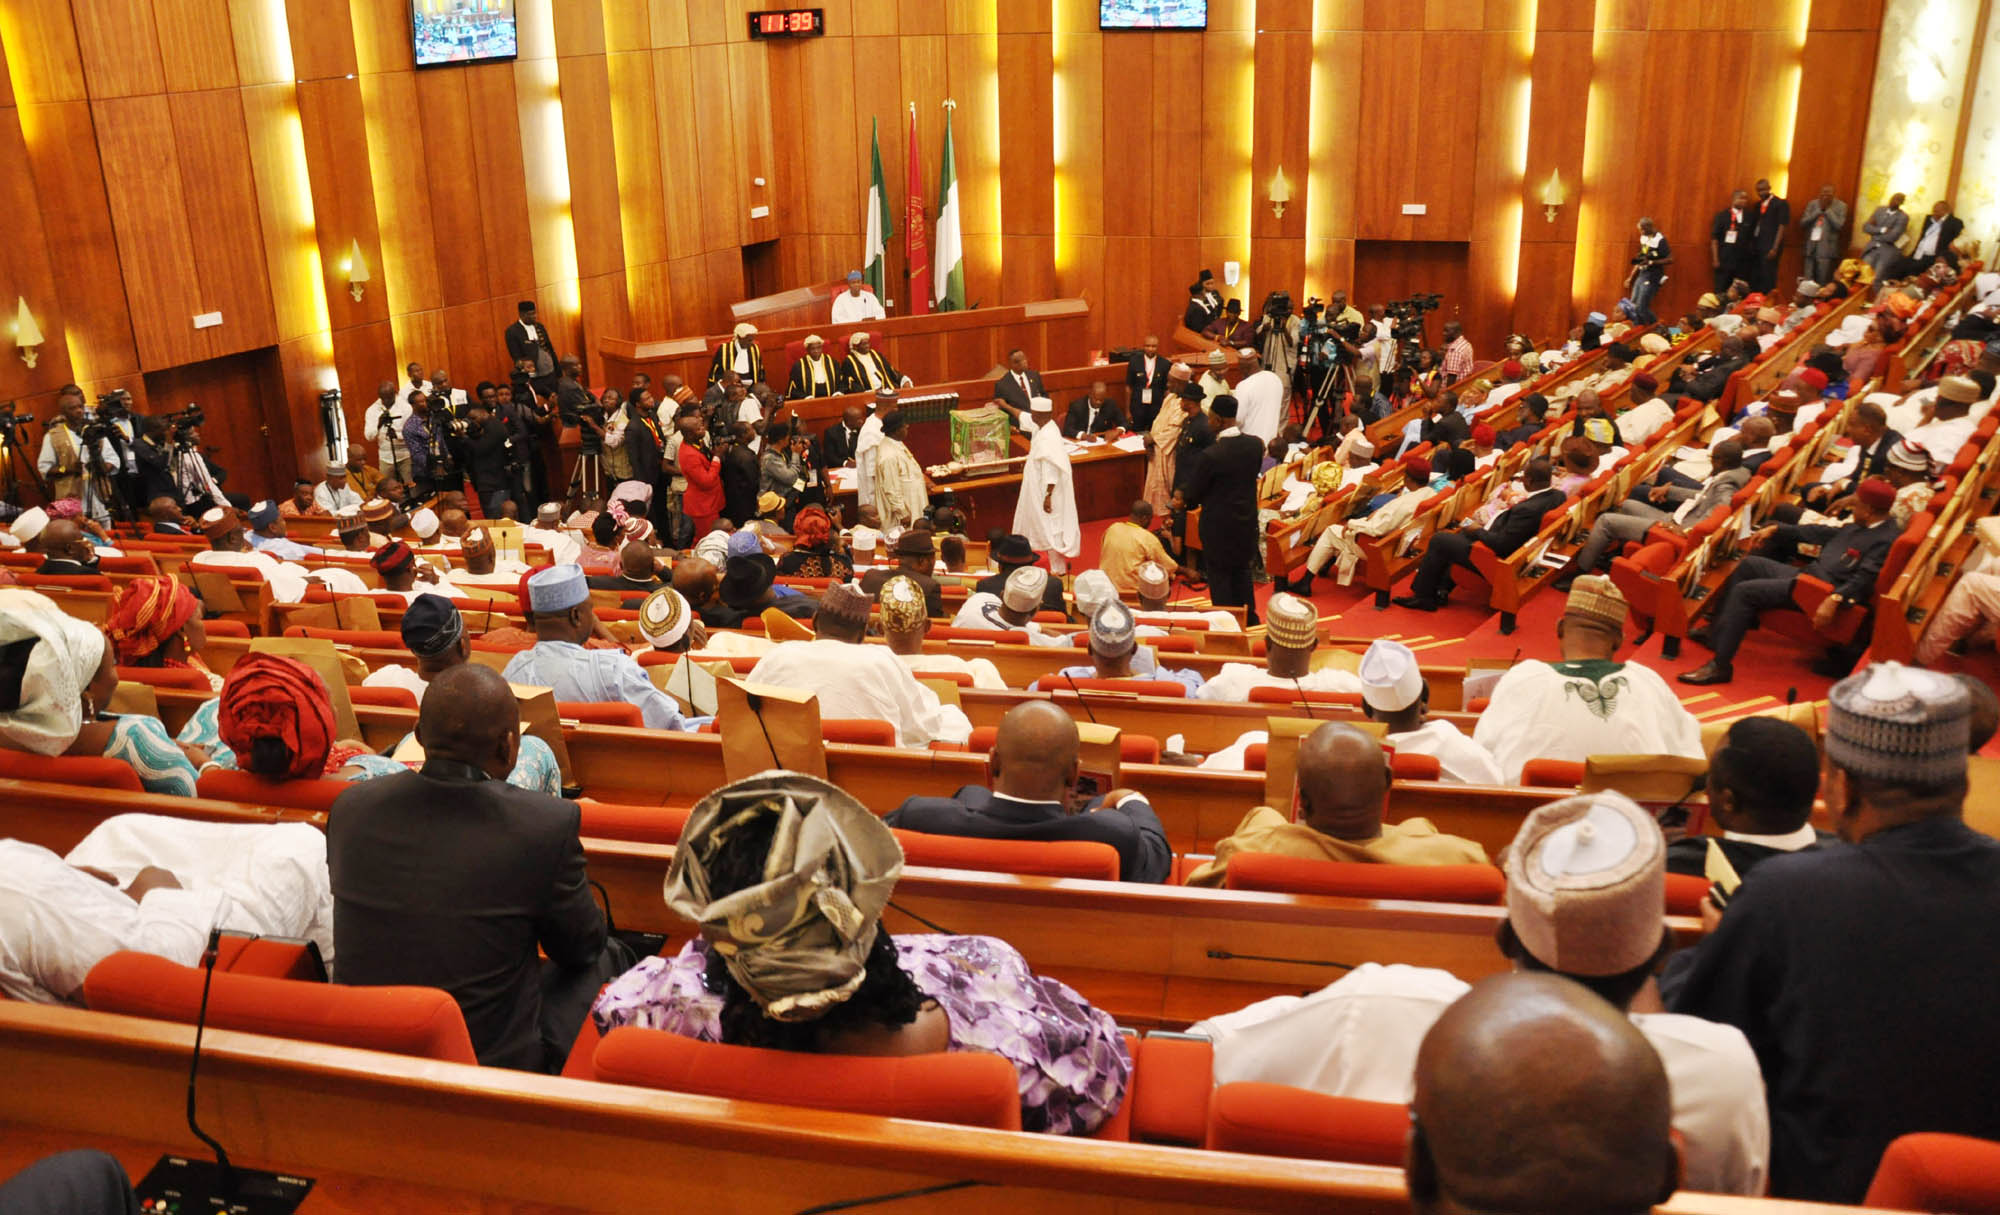 PDP Senators return to chambers for plenary